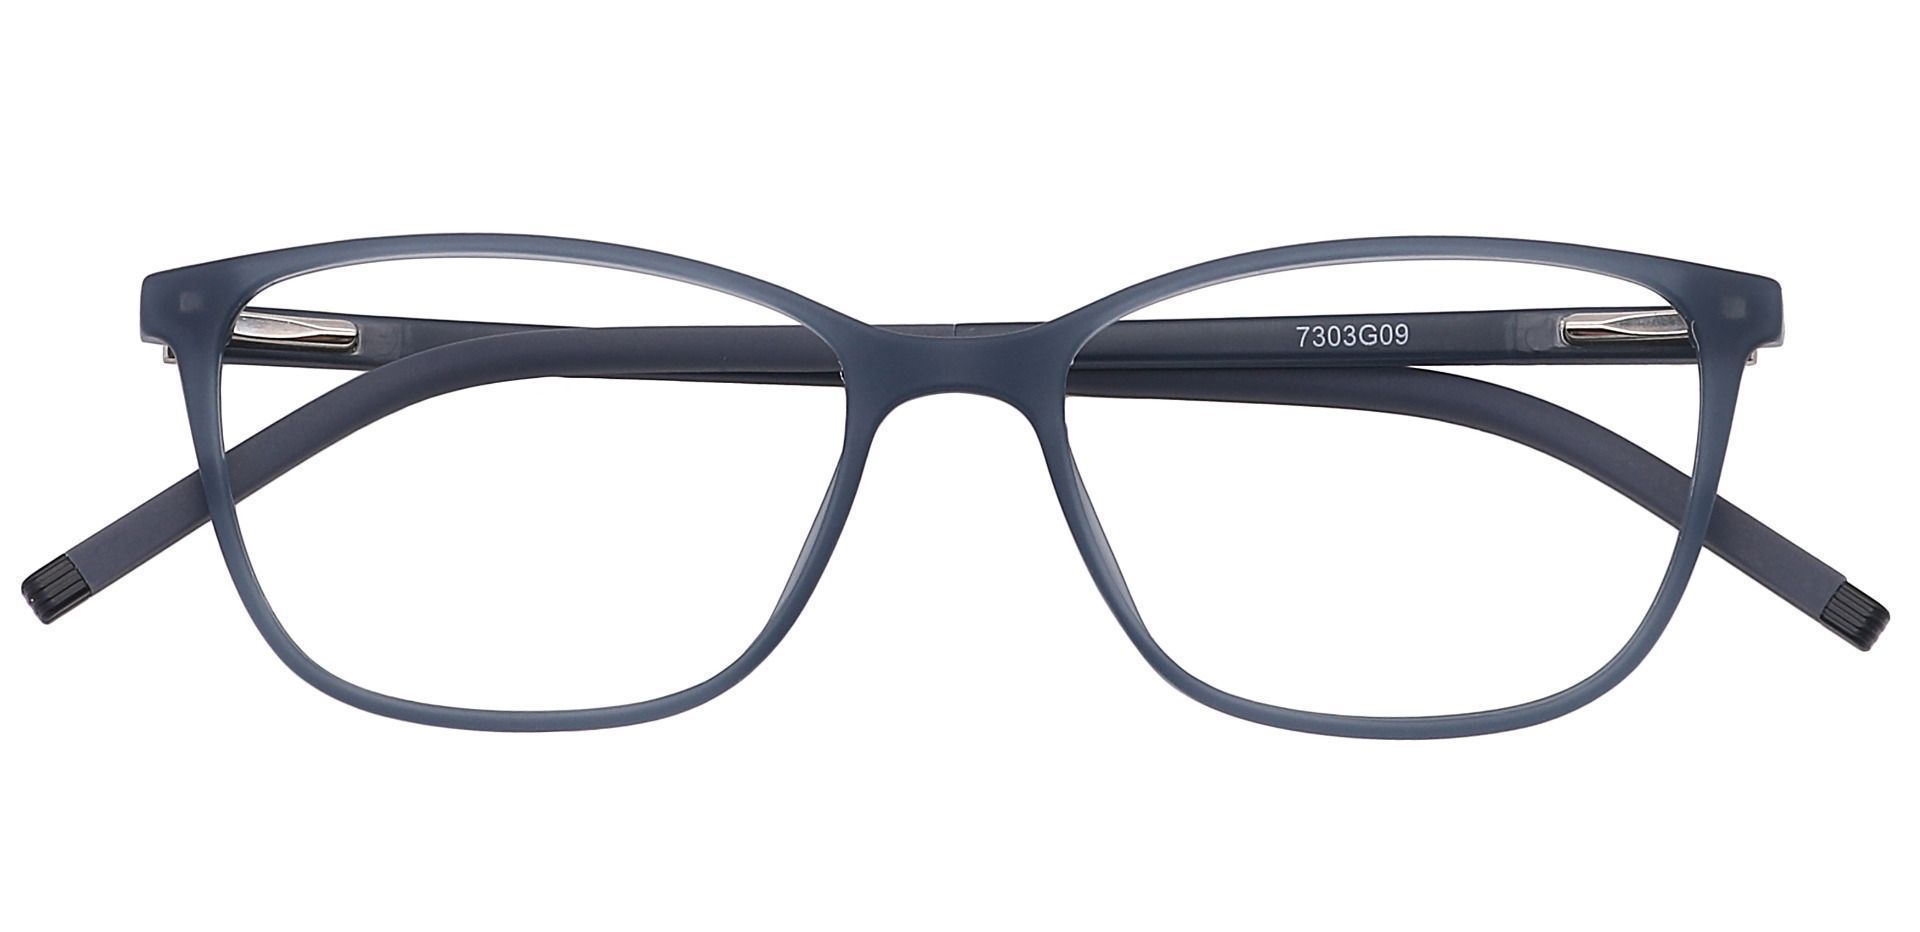 Danica Square Lined Bifocal Glasses - Gray